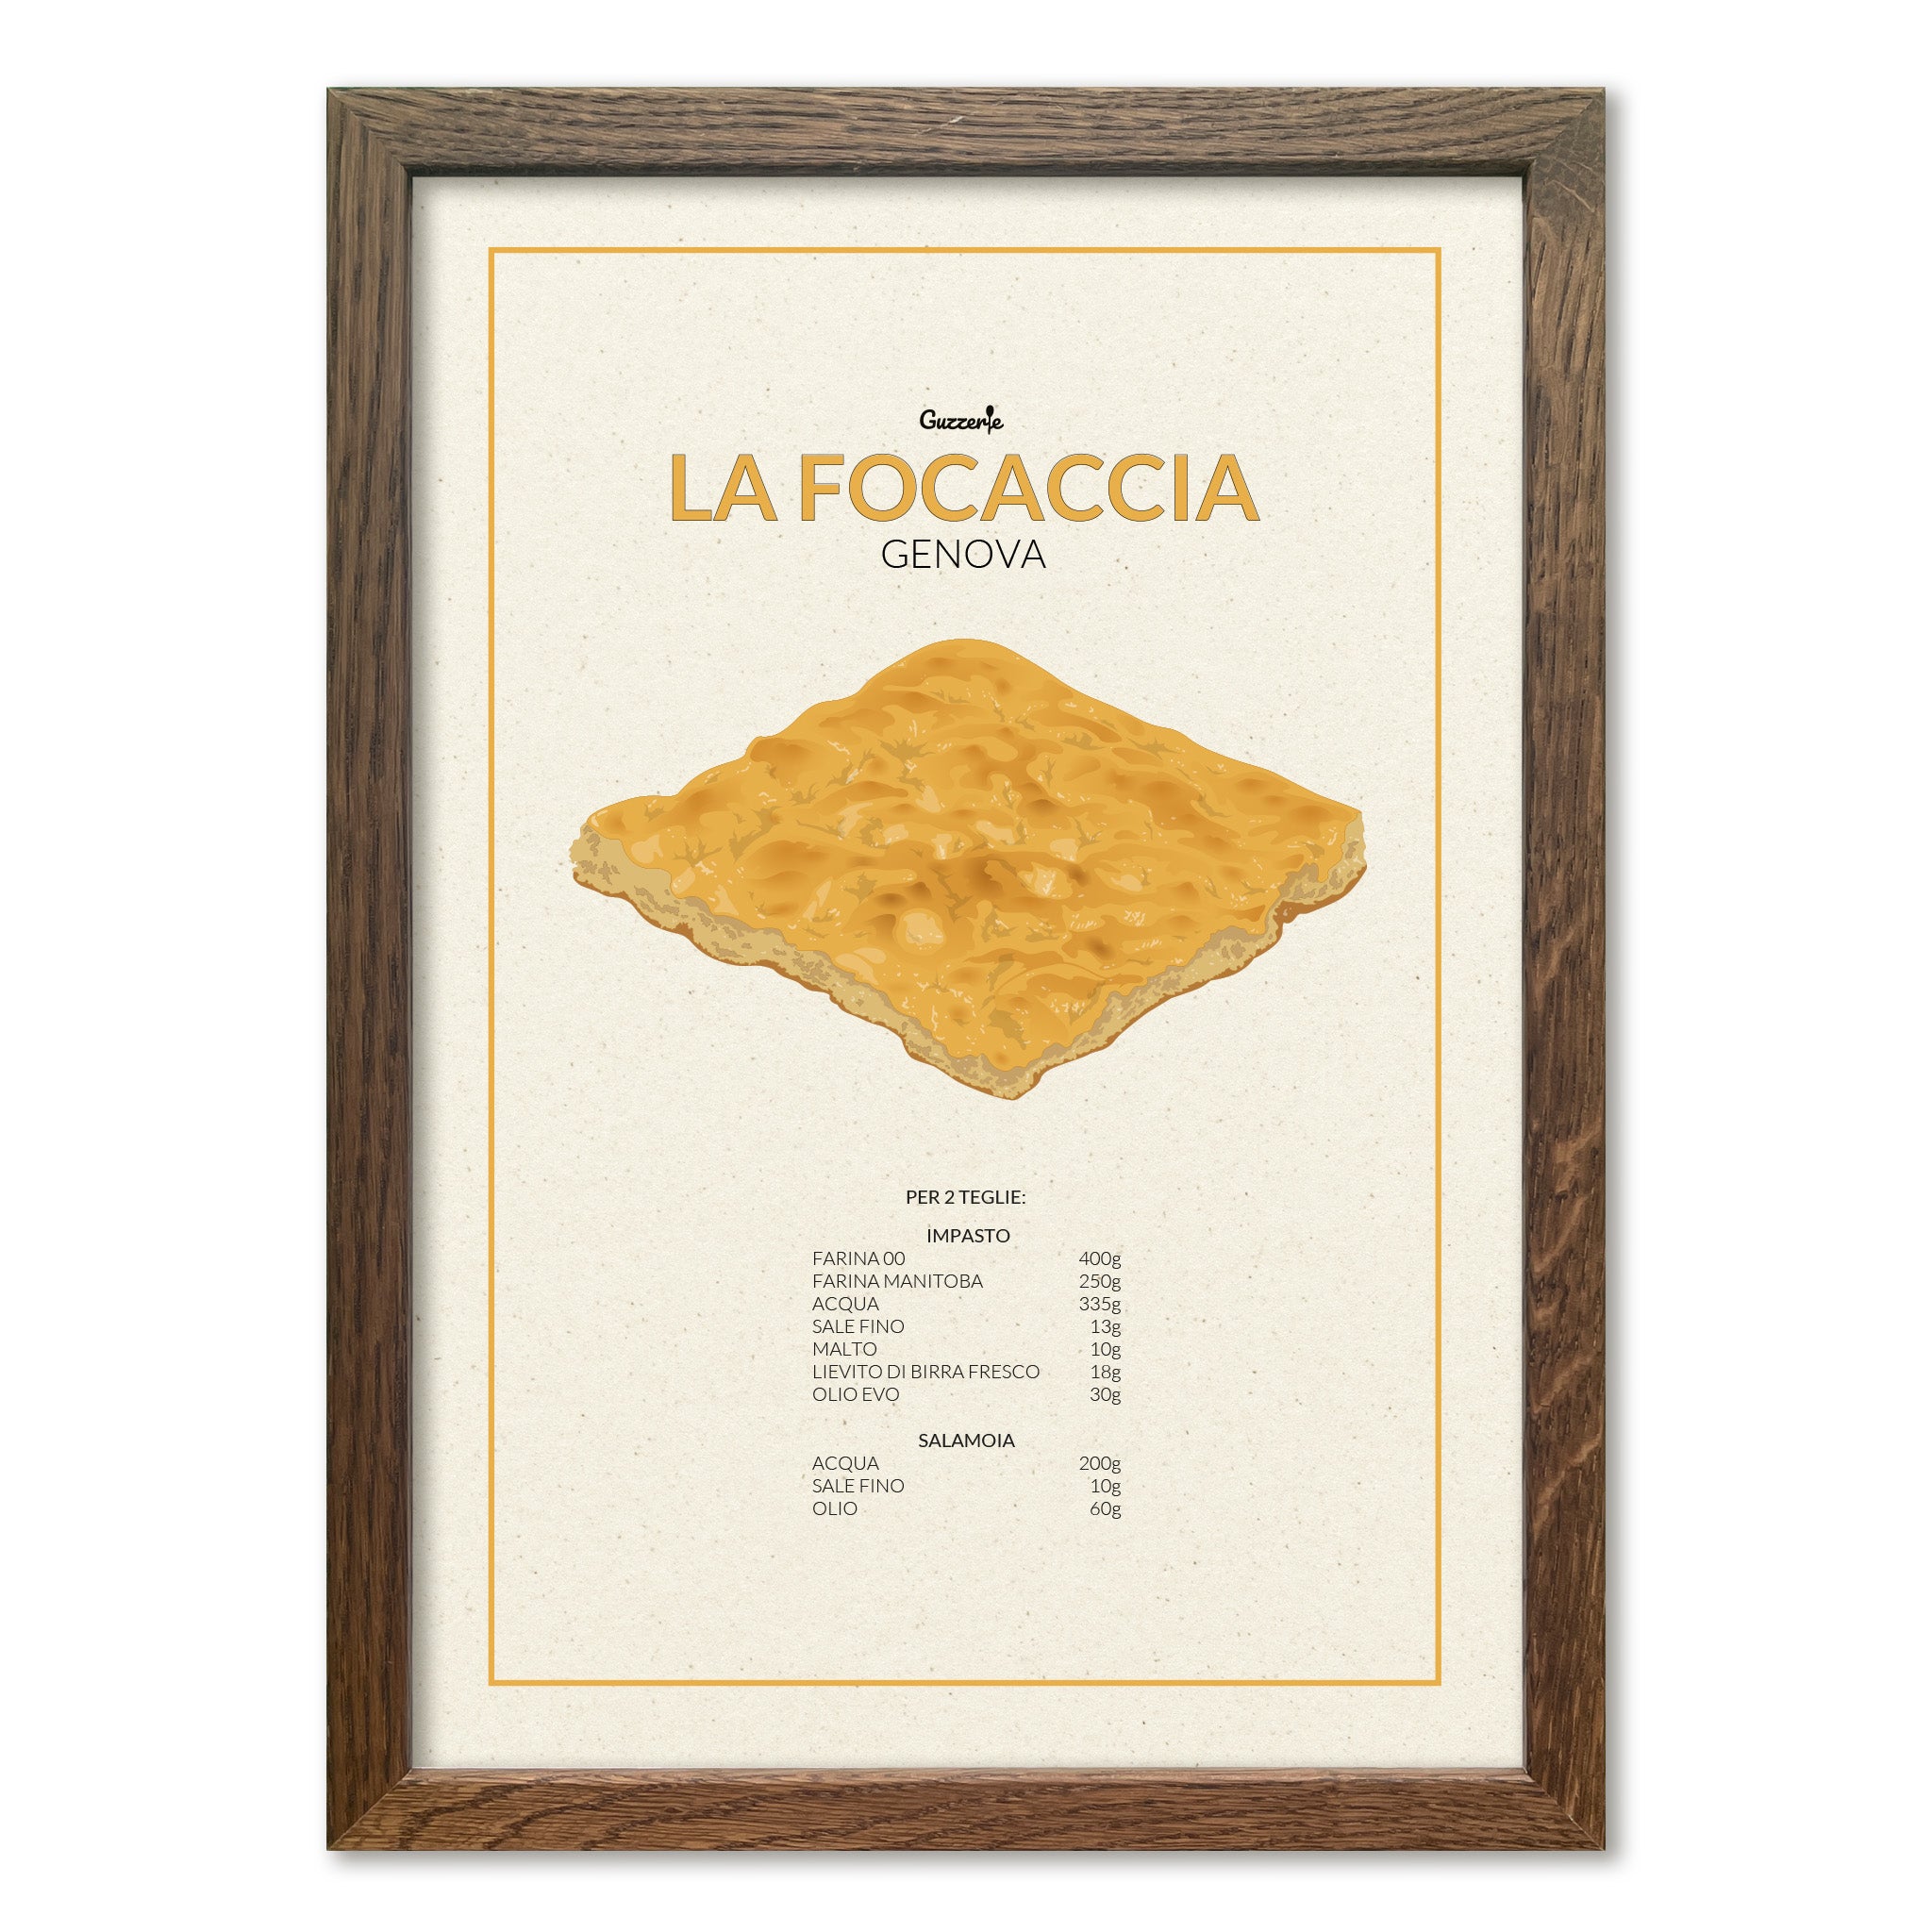 Iconic Poster of Focaccia | Guzzerie